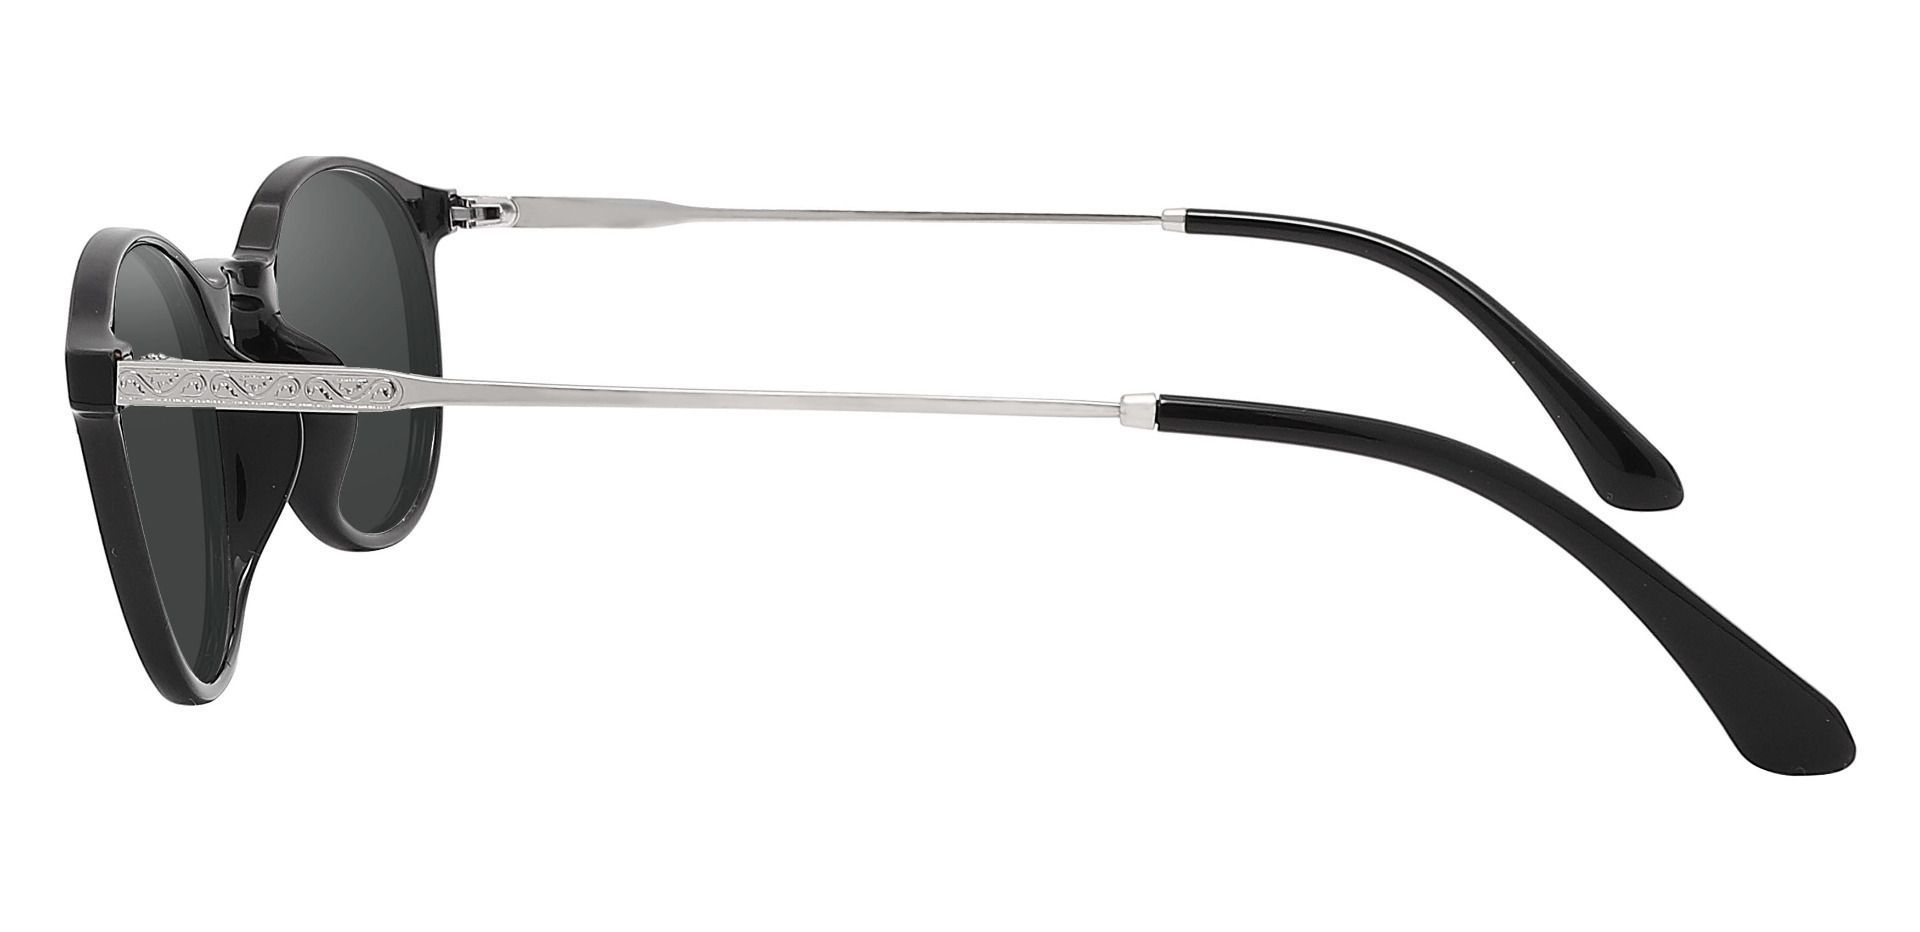 Felton Oval Lined Bifocal Sunglasses - Black Frame With Gray Lenses